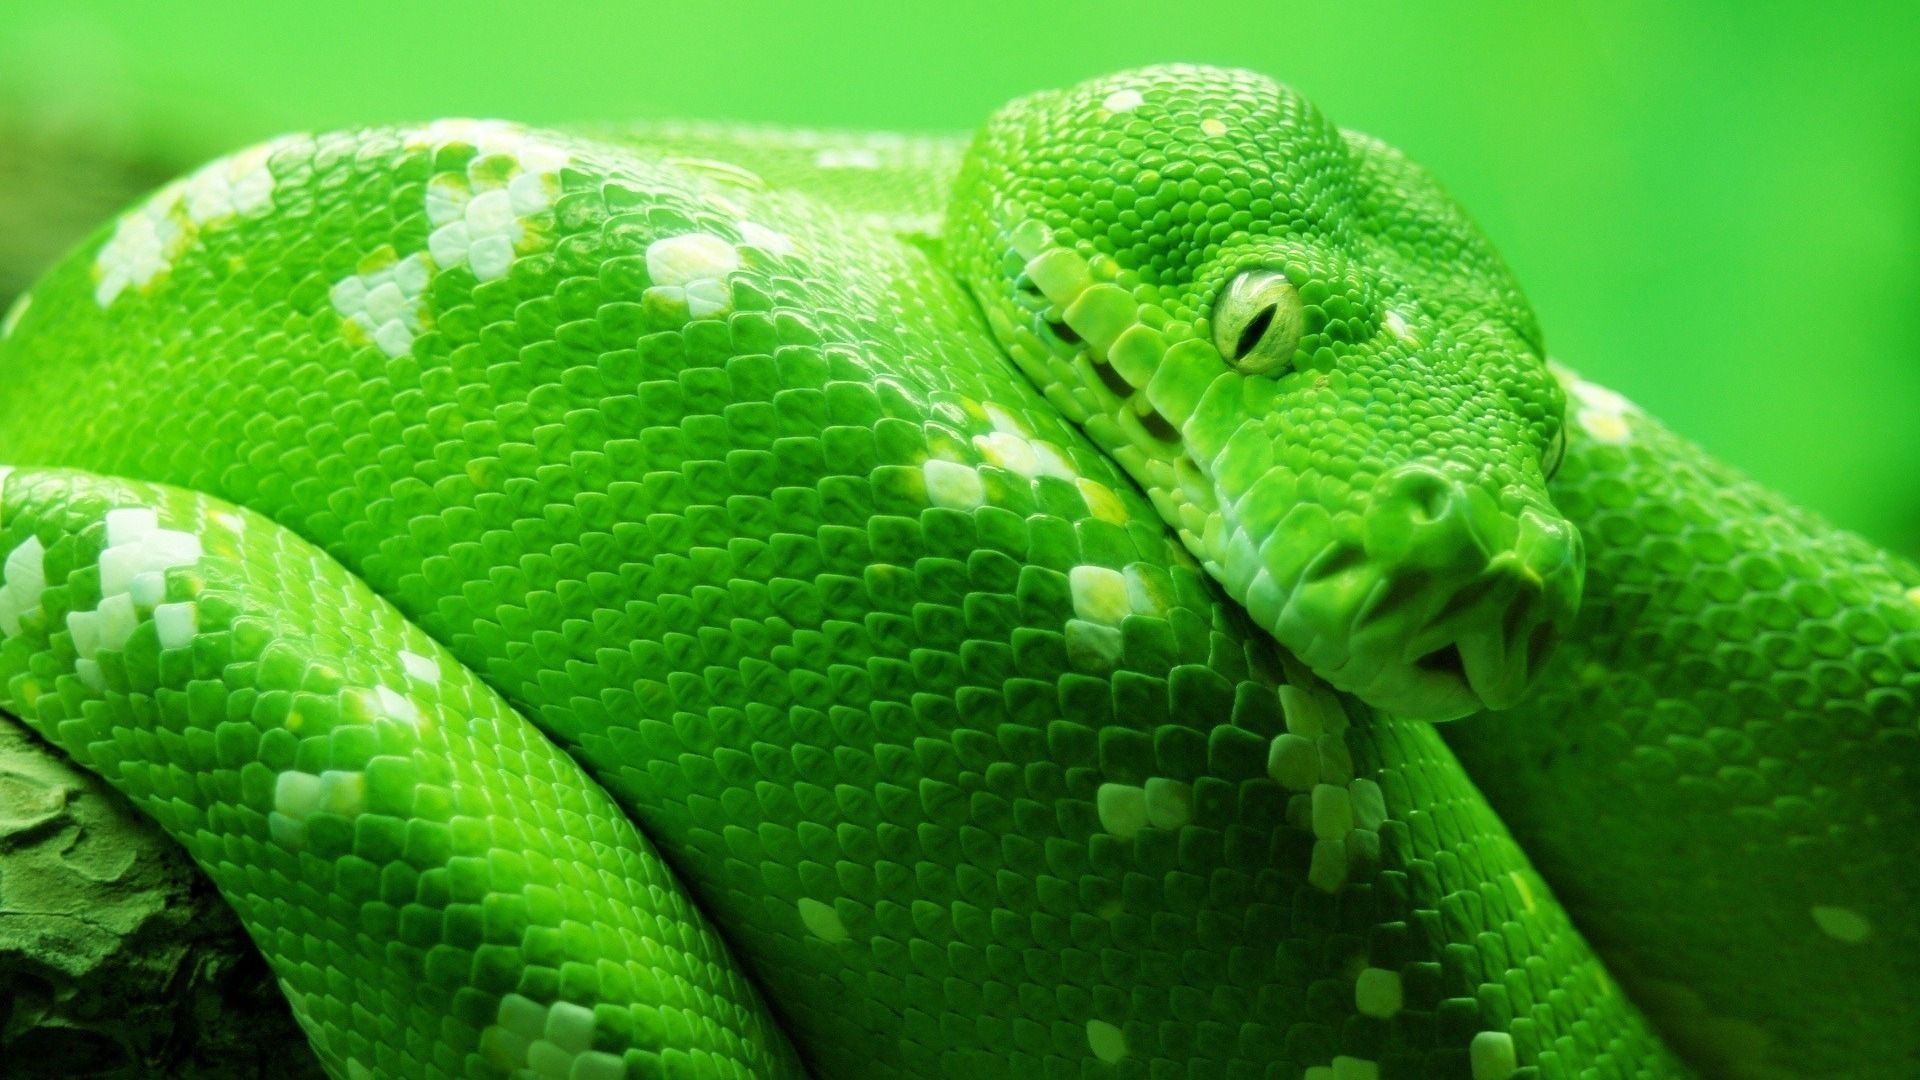 Big Snake HD Wallpapers | Snake Desktop Wallpapers | Cool Wallpapers